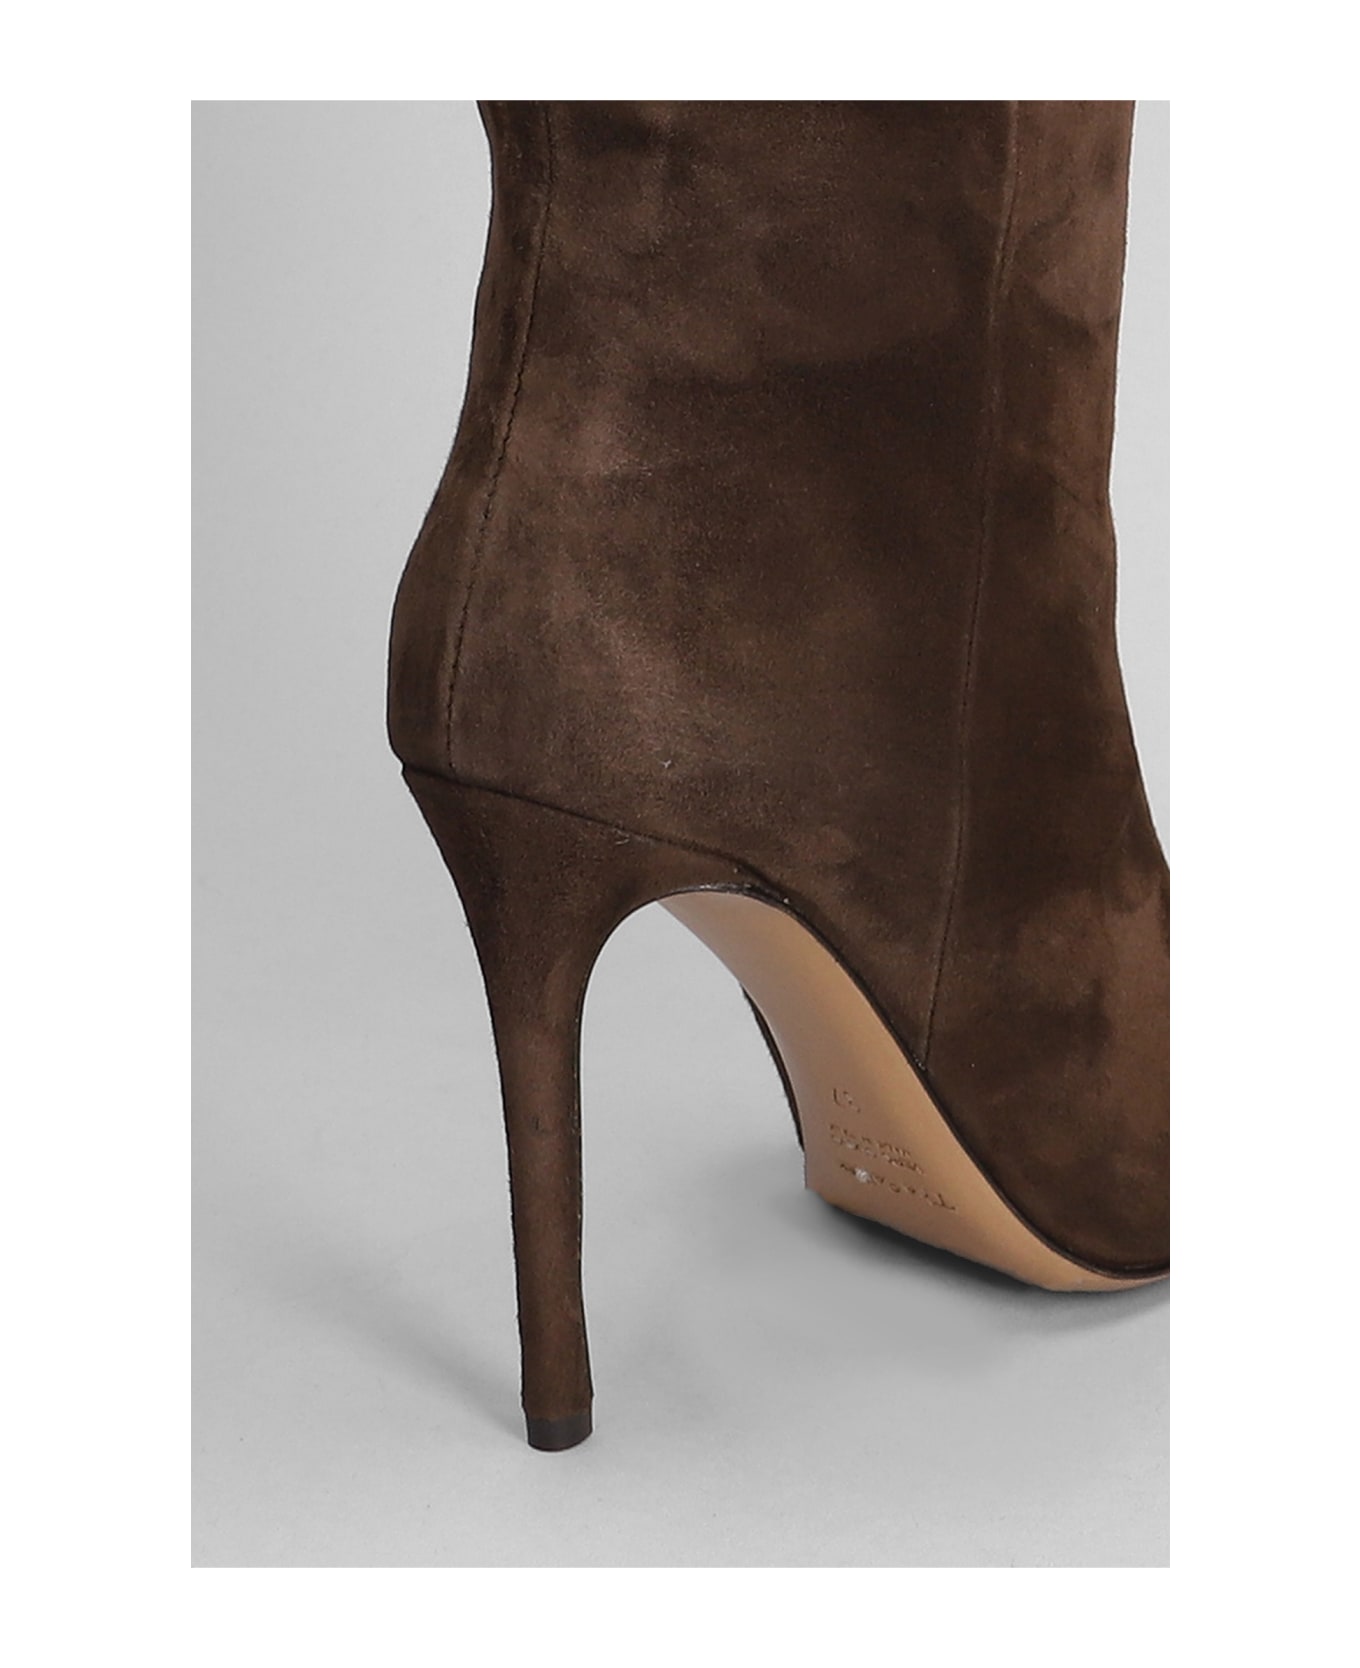 The Seller High Heels Boots In Dark Brown Suede - dark brown